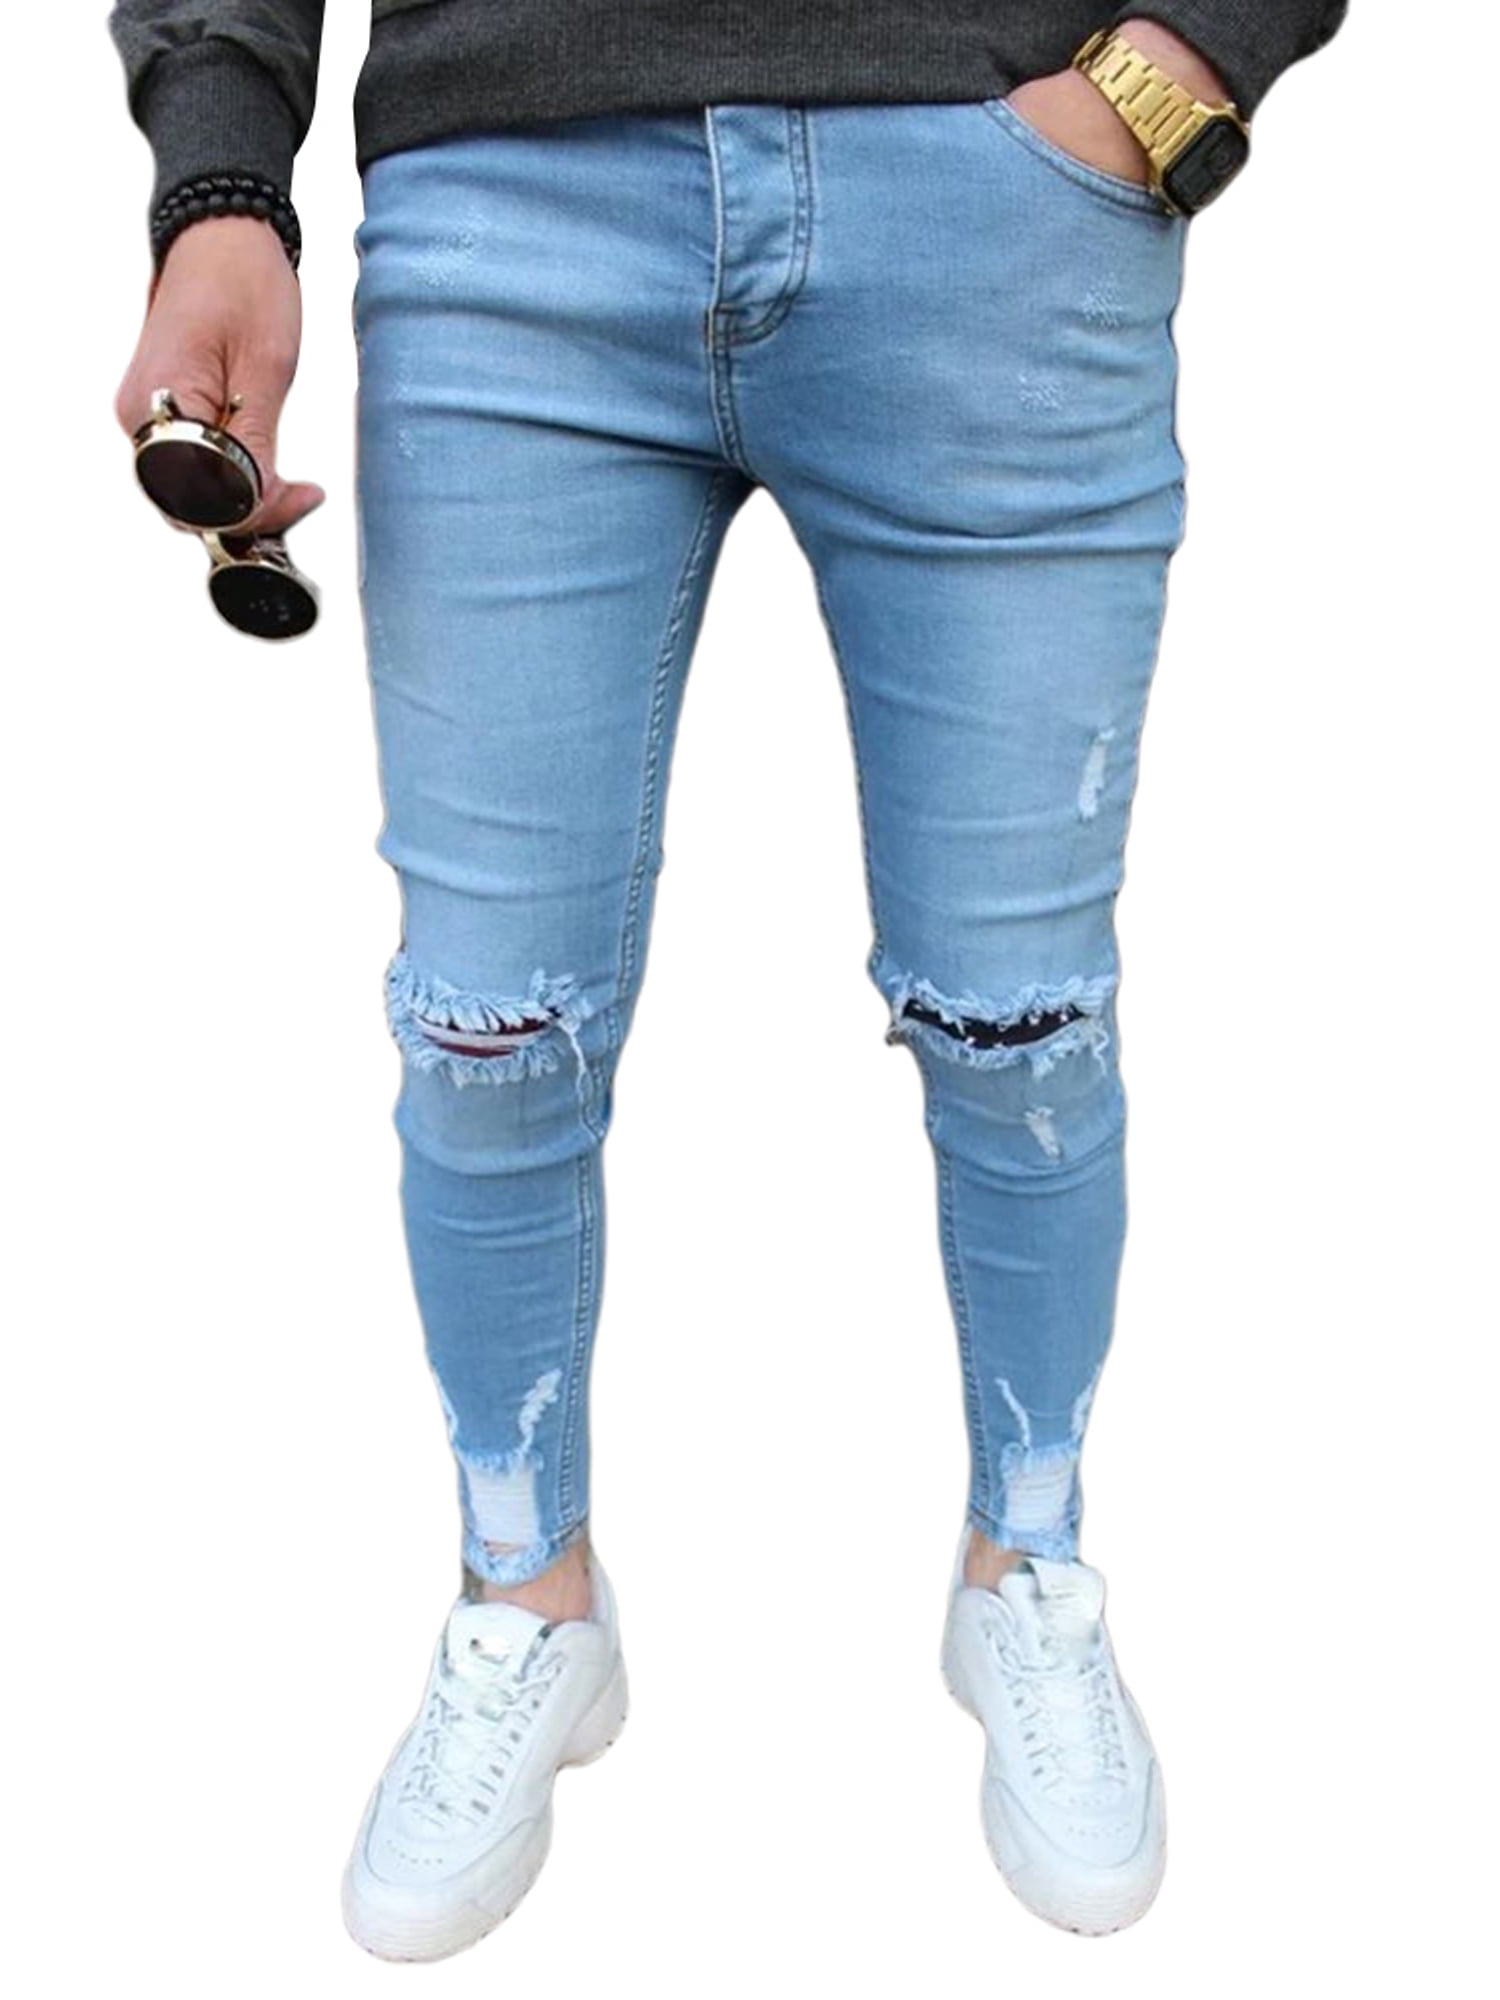 IEasⓄn Mens Long Jeans,Man Mid-Waist Fashion Casual Denim Knee Length Pants Trousers 